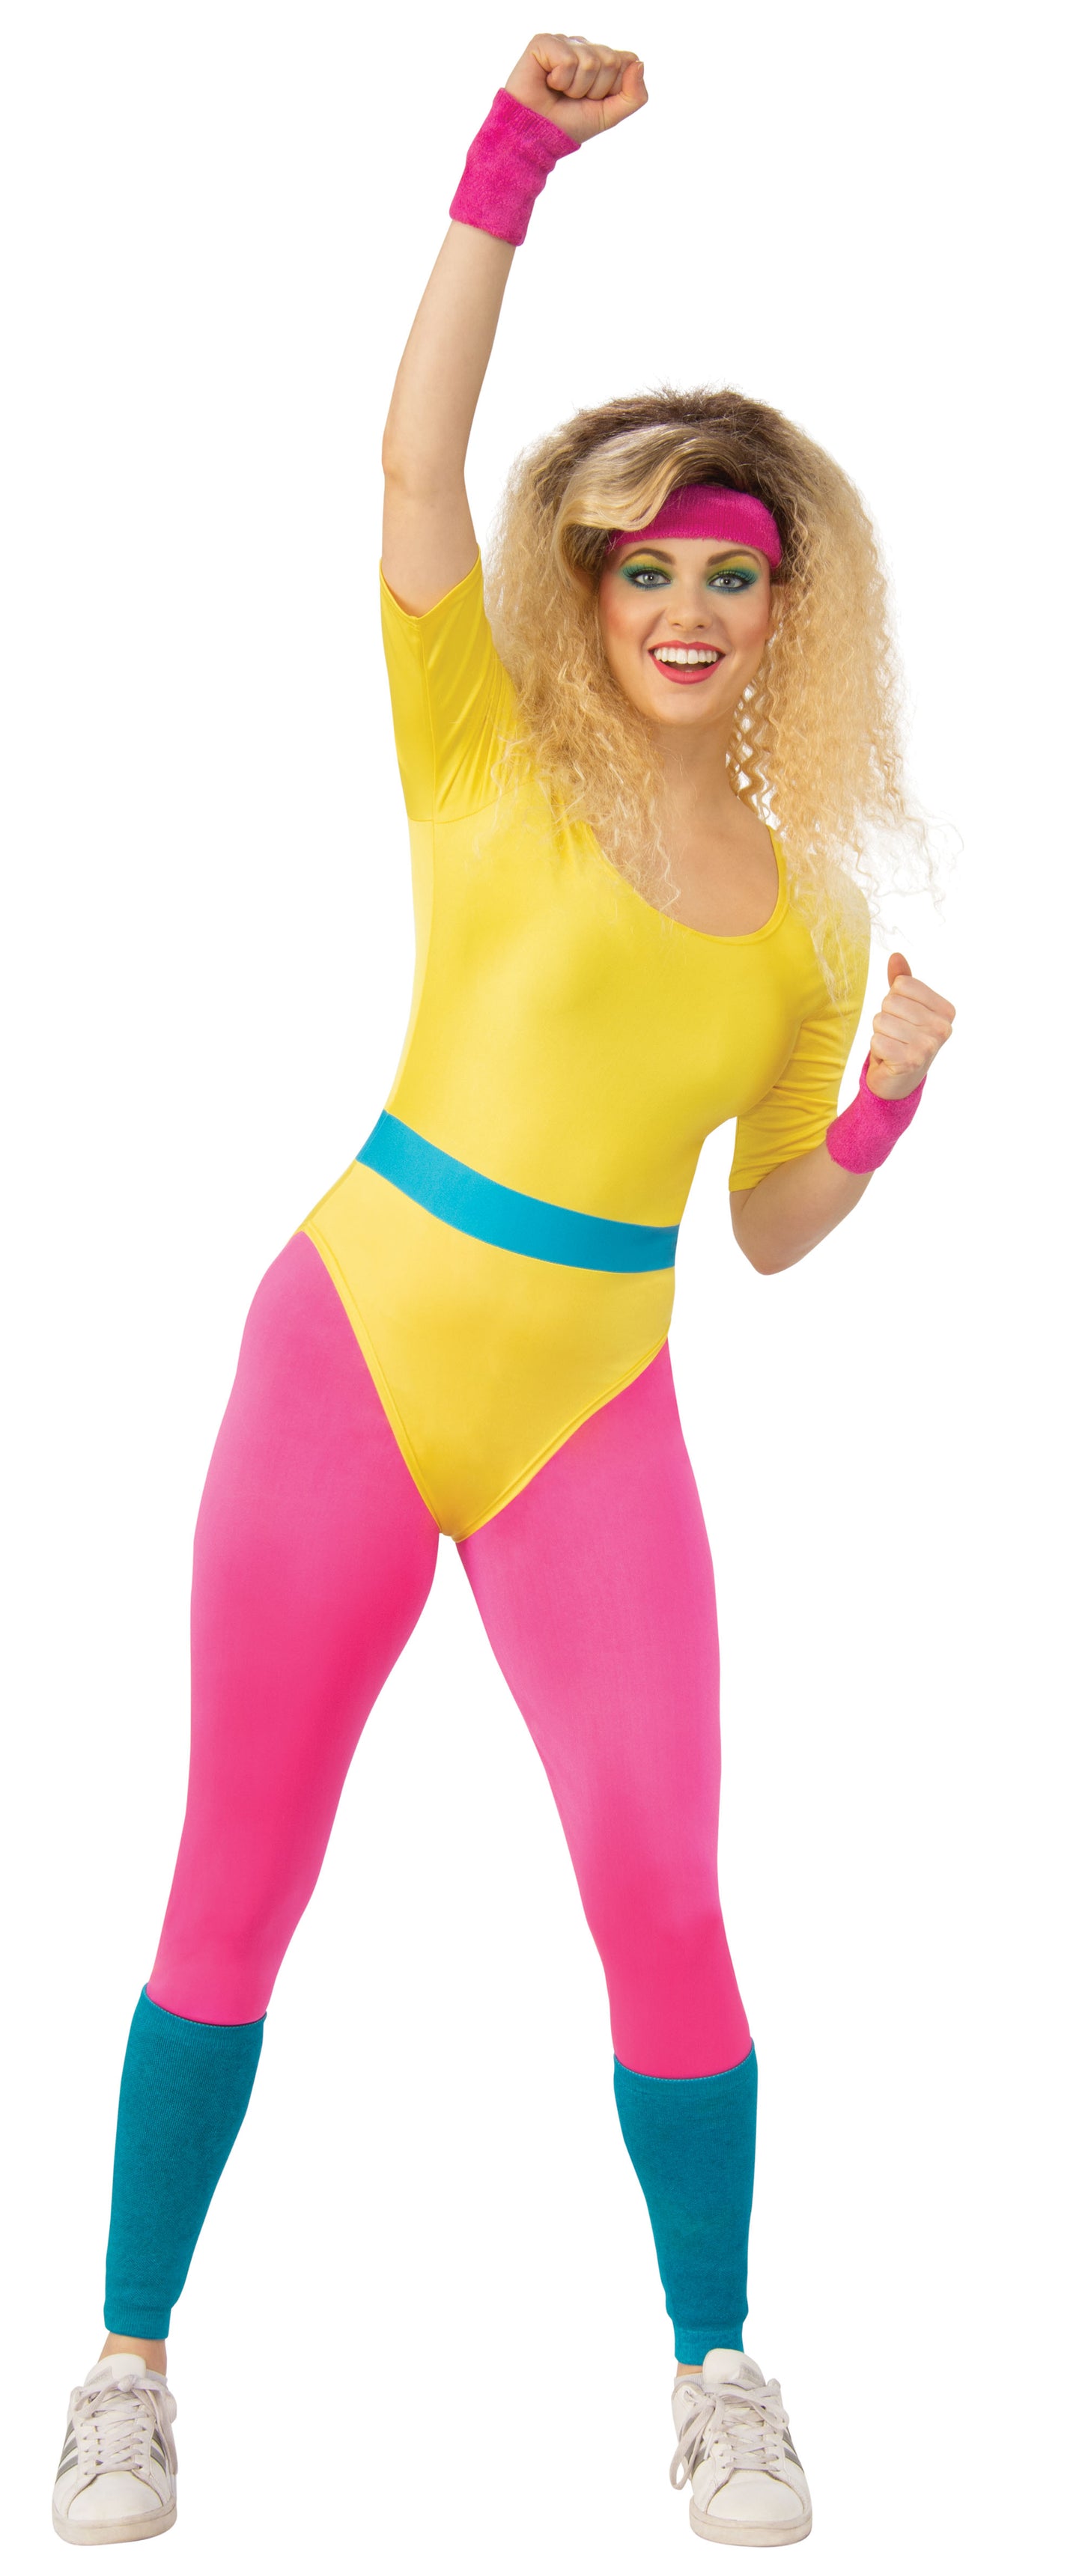 Aerobics Girl Costume